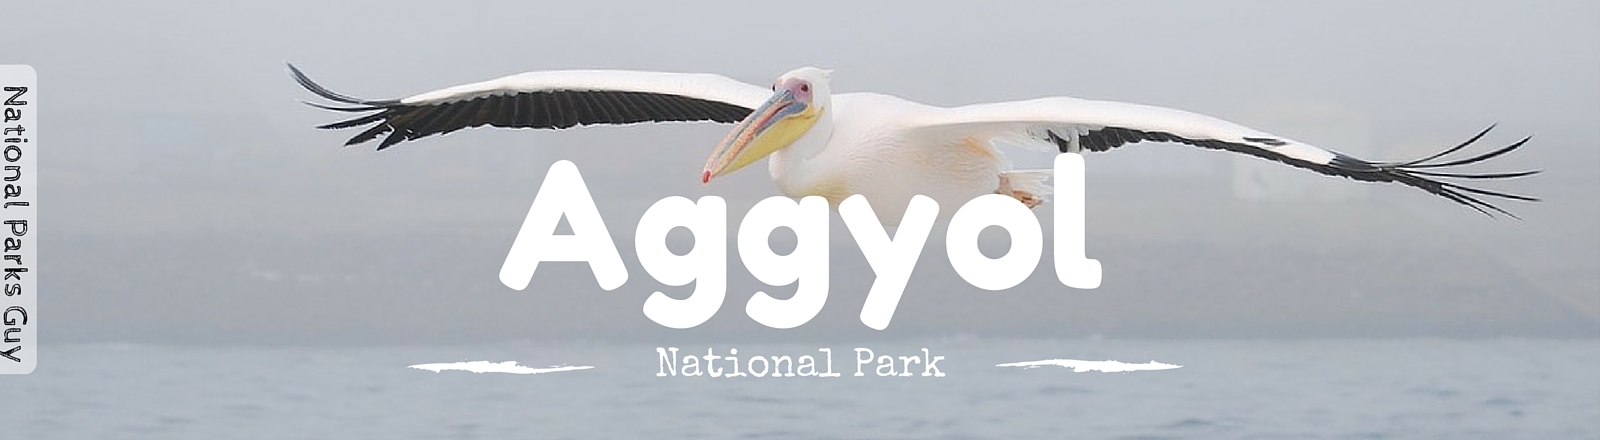 Aggyol National Park, Azerbaijan, National Parks Guy